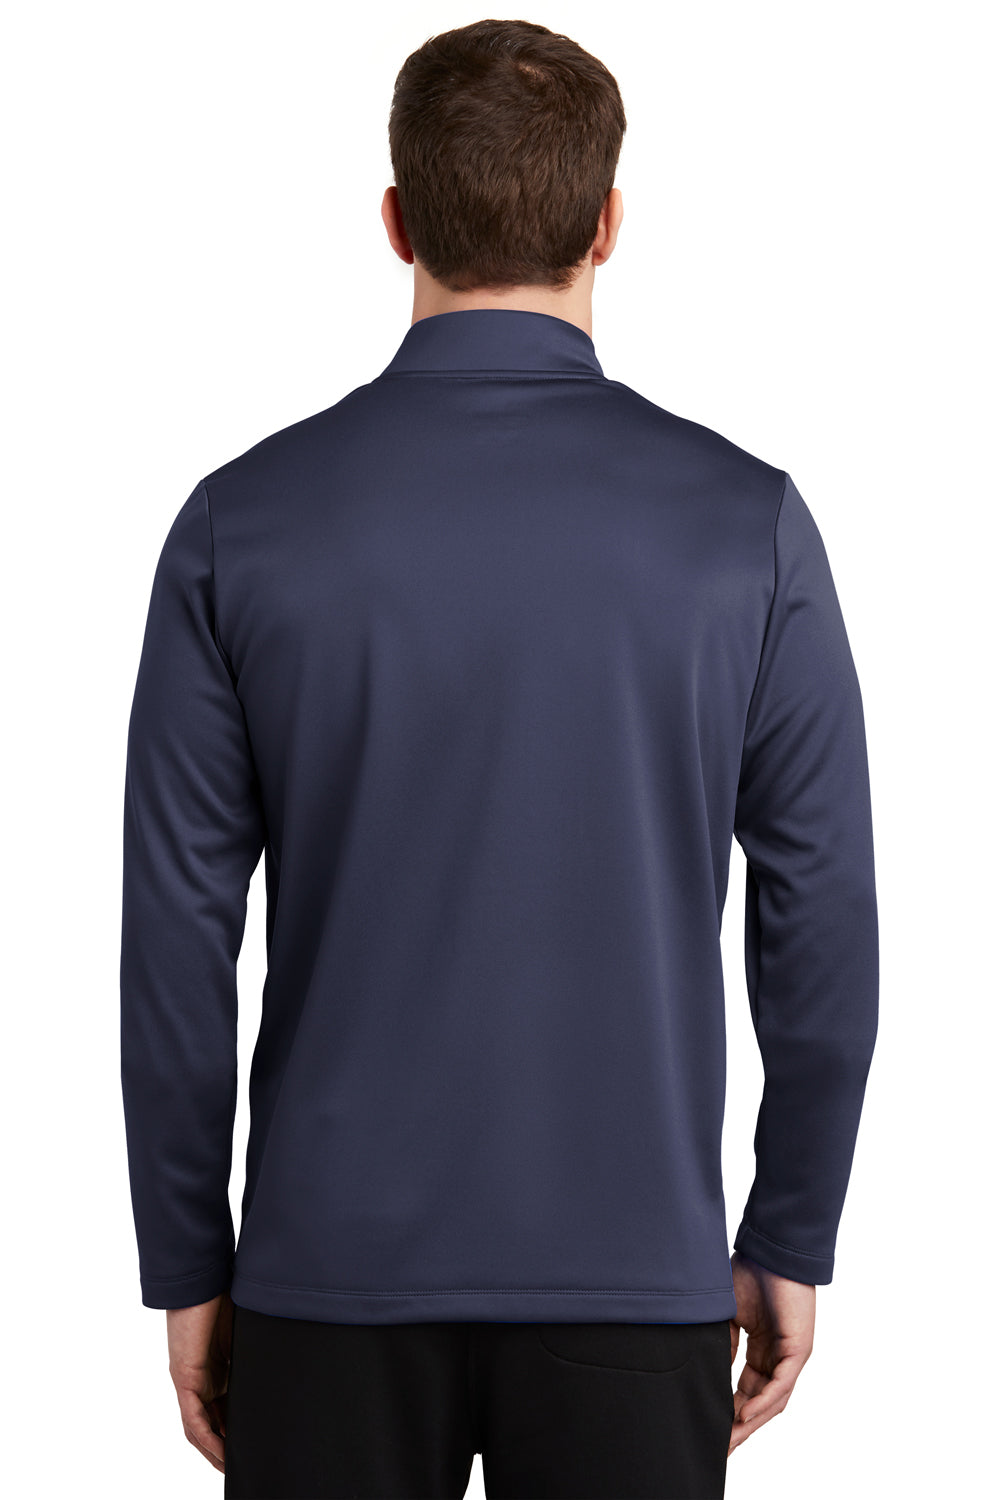 Nike NKAH6418 Mens Therma-Fit Moisture Wicking Fleece Full Zip Sweatshirt Midnight Navy Blue Model Back